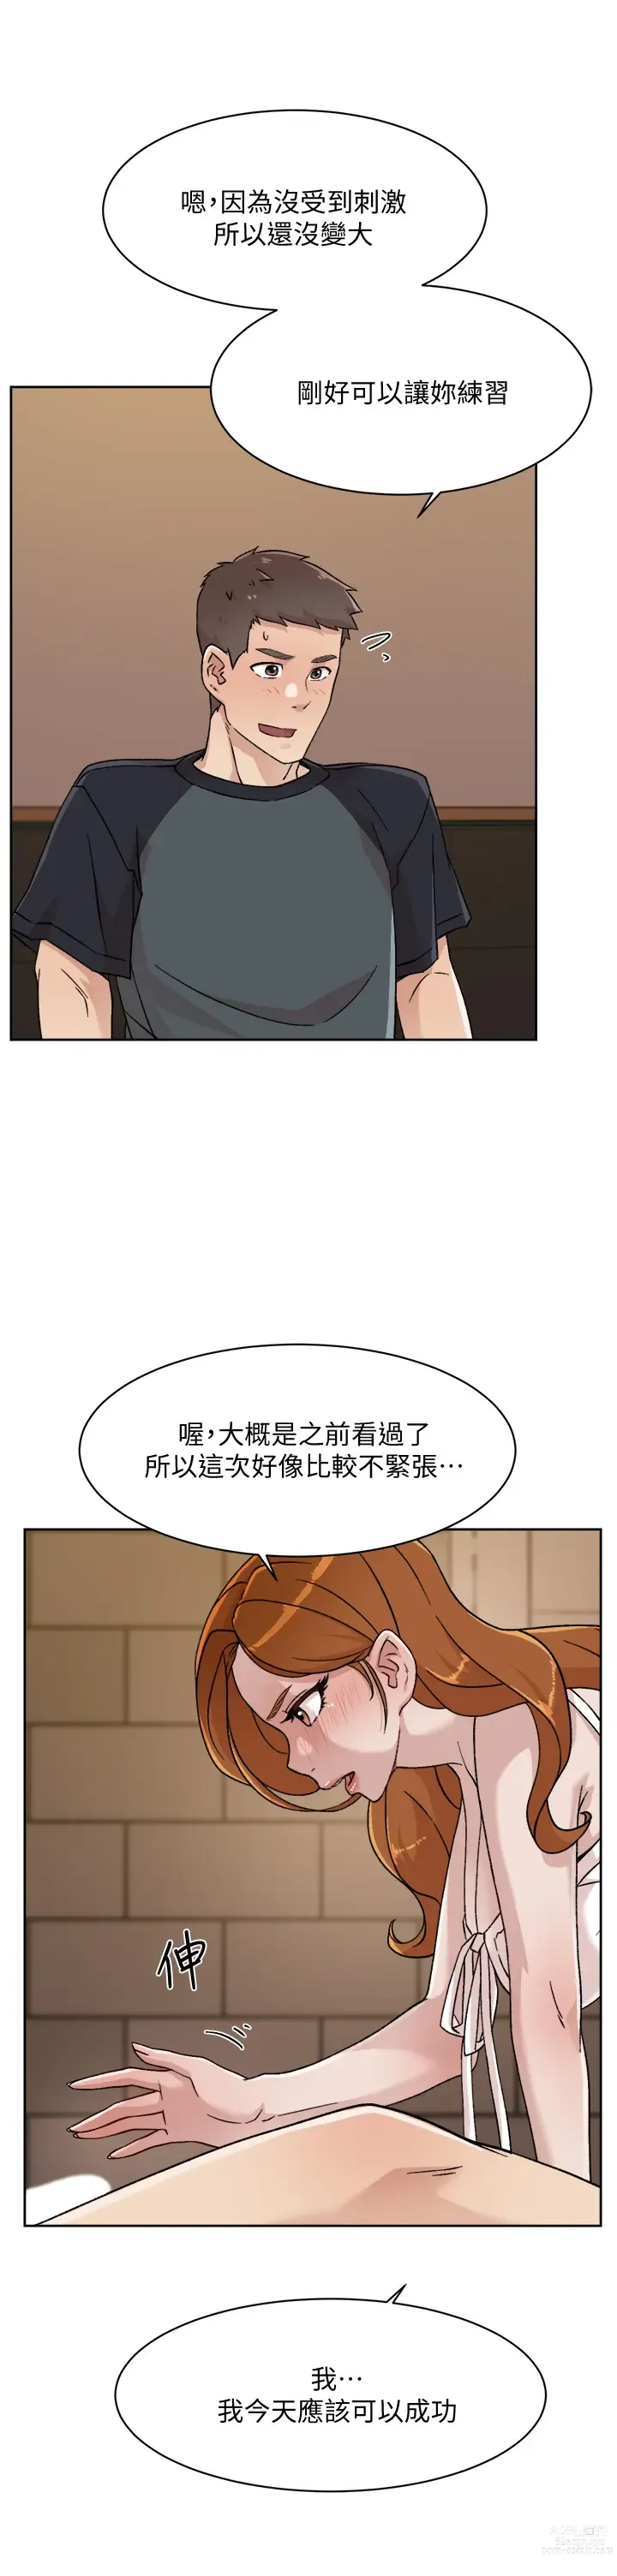 Page 21 of manga 好友的私生活